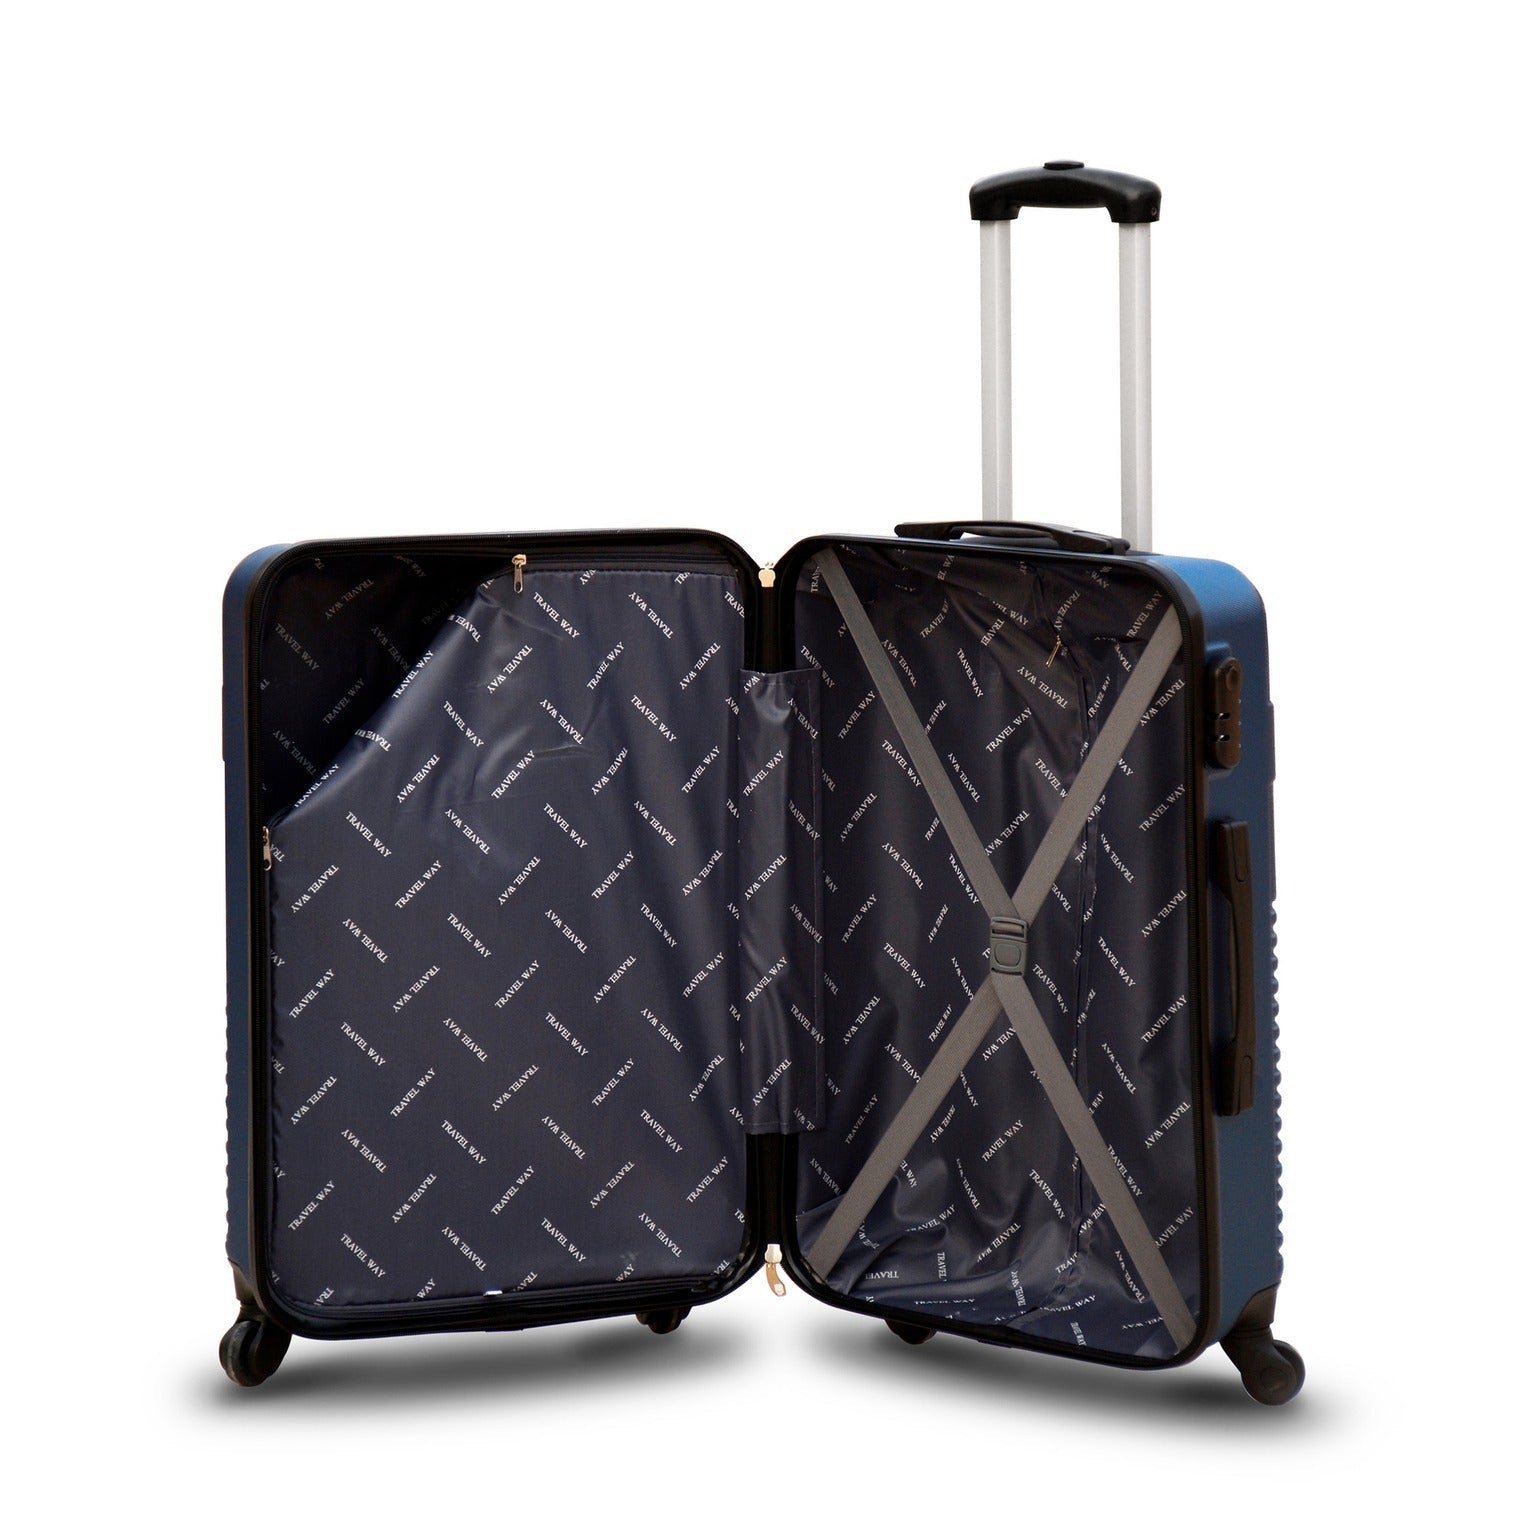 32" Blue Travel Way ABS Luggage Lightweight Hard Case Trolley Big Size Bag